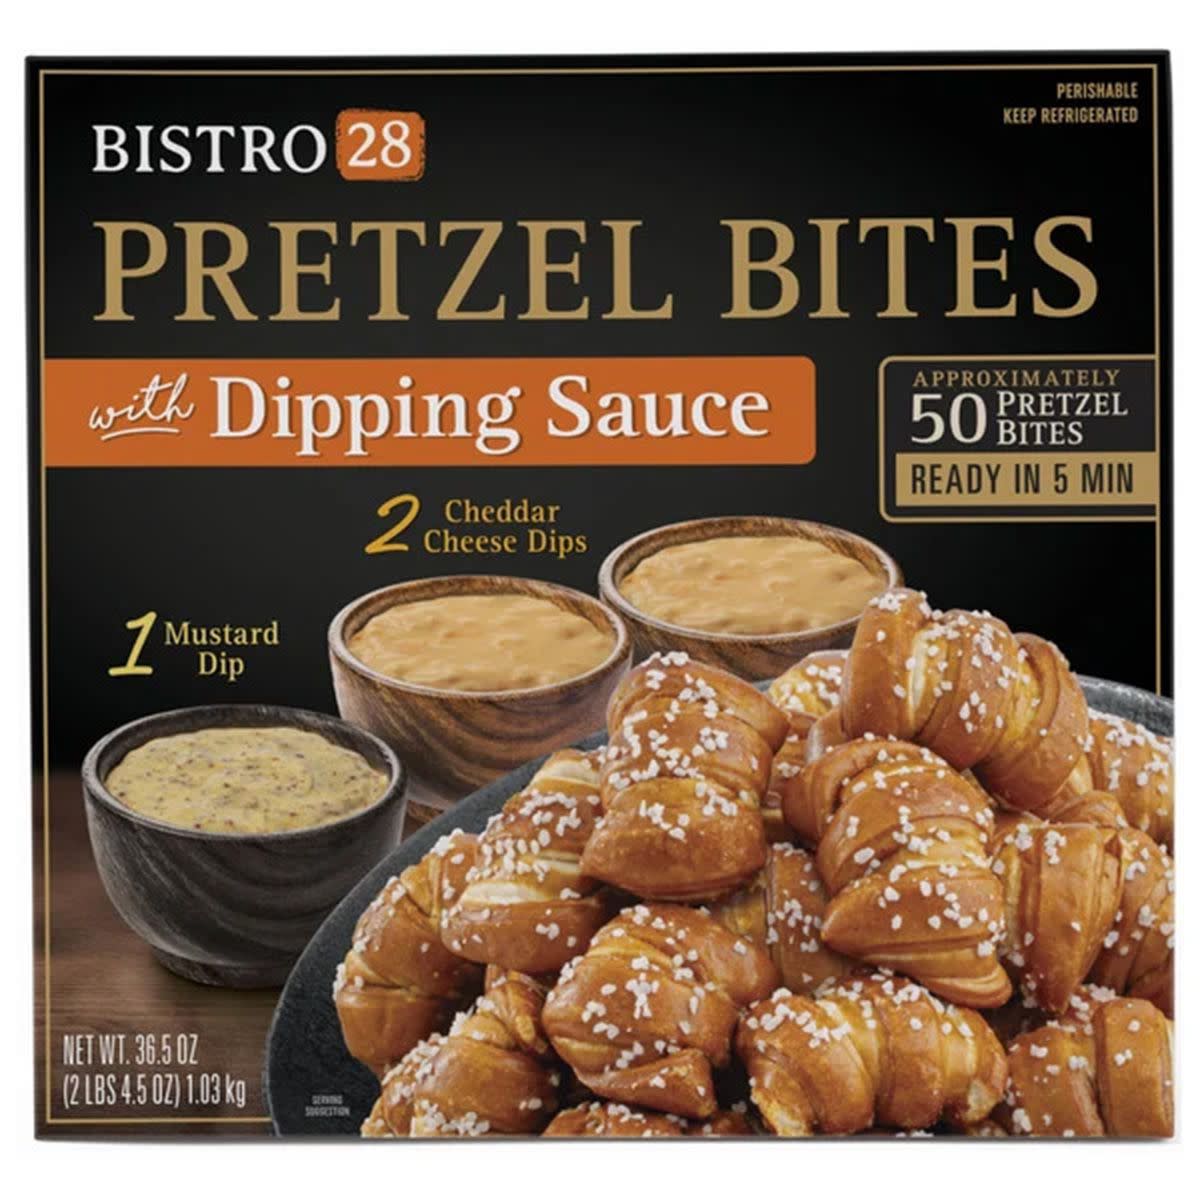 A box of Bistro 28 Pretzel Bites against a white background